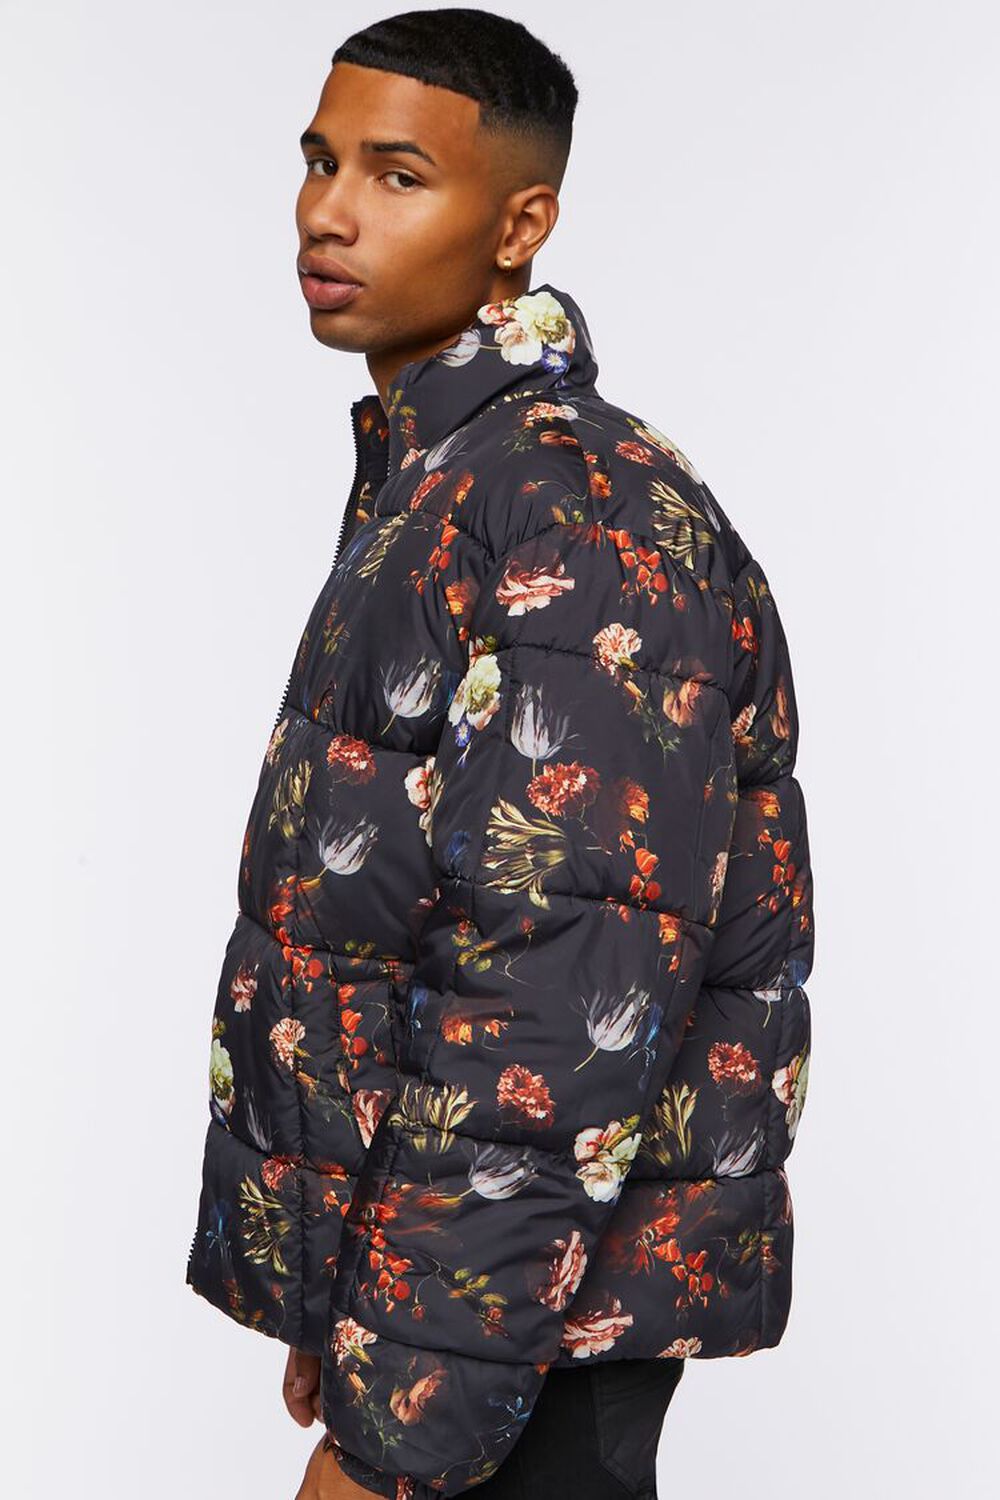 BLACK/MULTI Floral Print Puffer Jacket, image 3